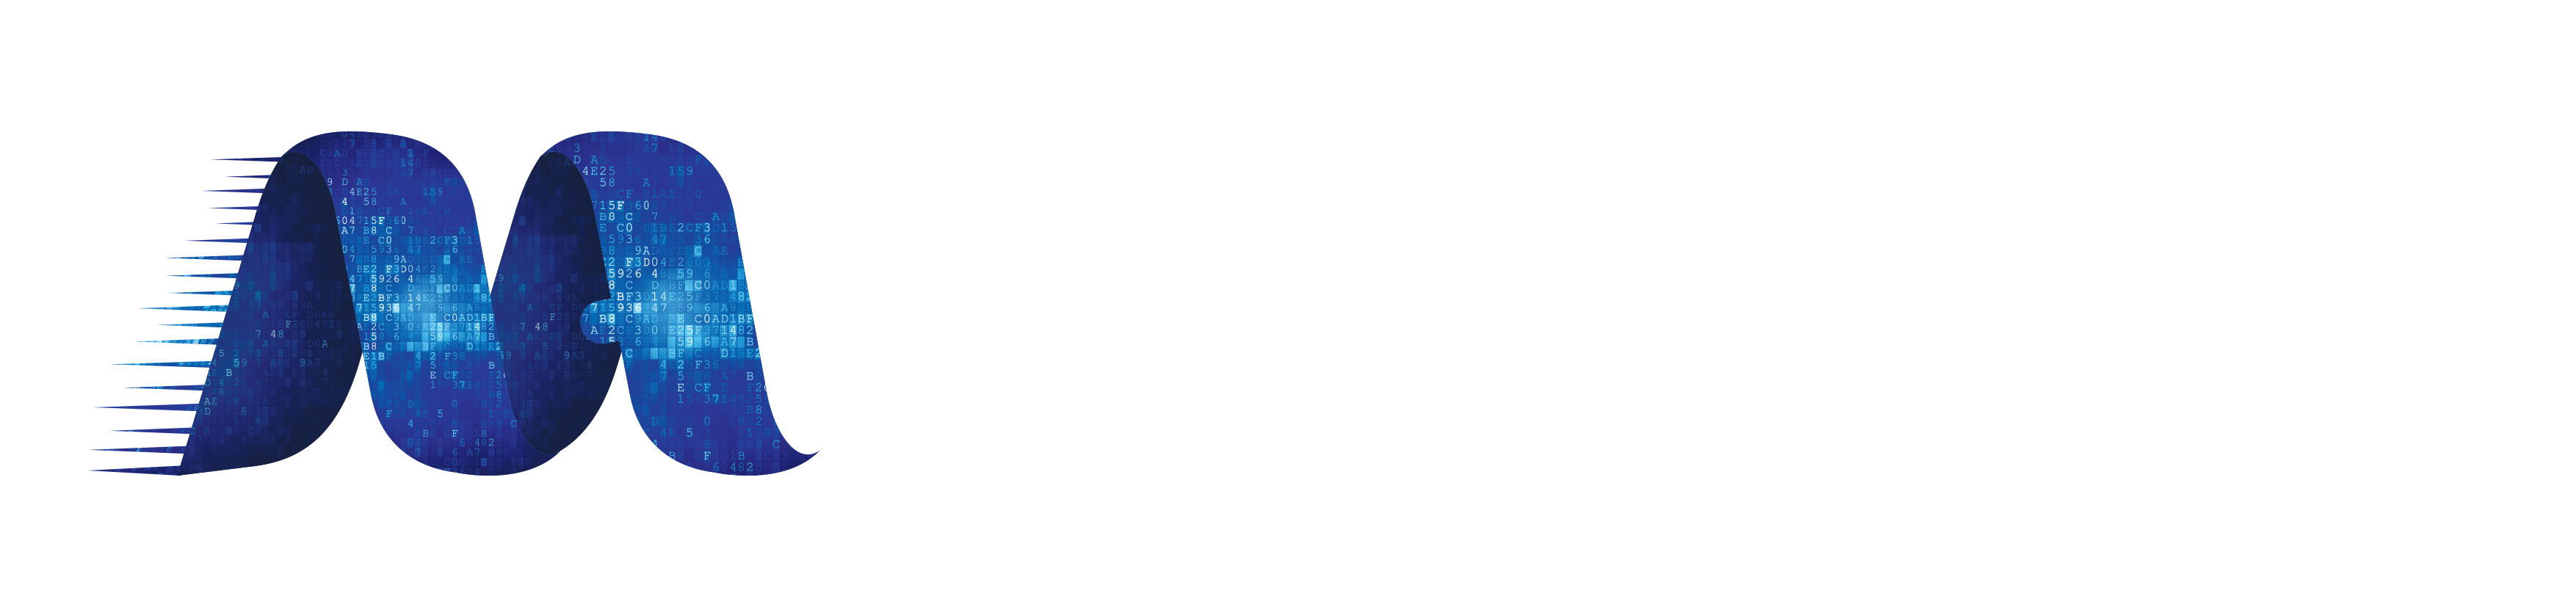 Nitro Agility